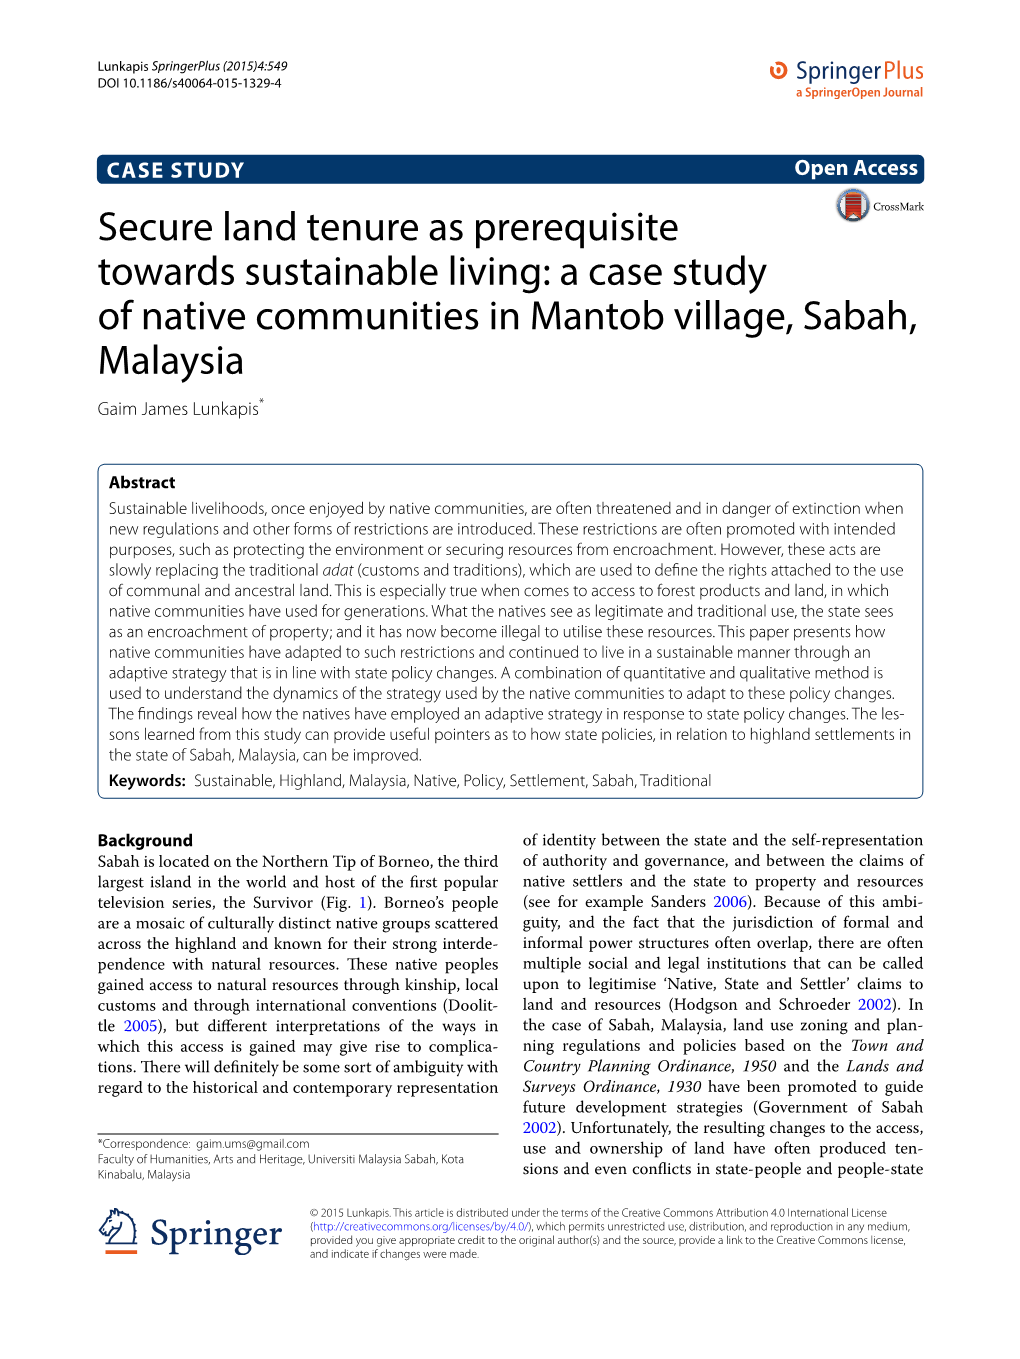 Secure Land Tenure As Prerequisite Towards Sustainable Living: a Case Study of Native Communities in Mantob Village, Sabah, Malaysia Gaim James Lunkapis*